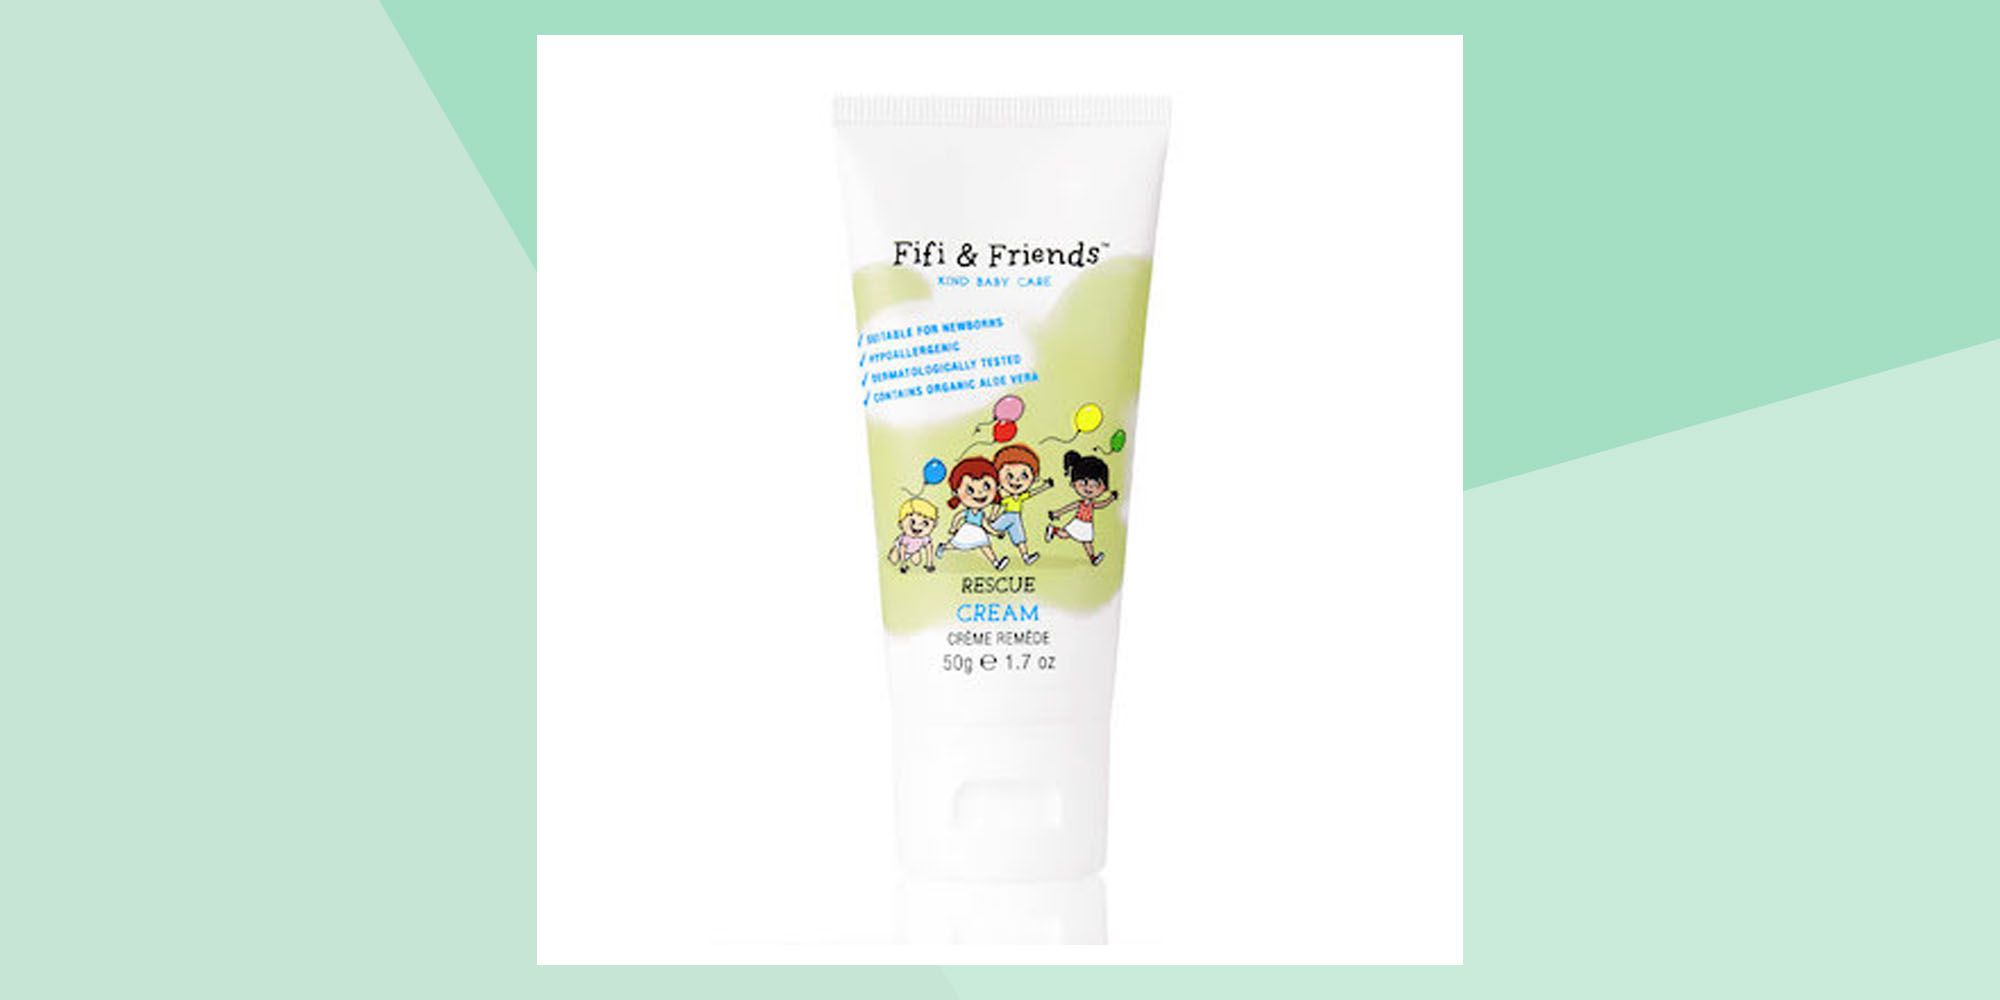 fifi and friends cream - women's health uk 